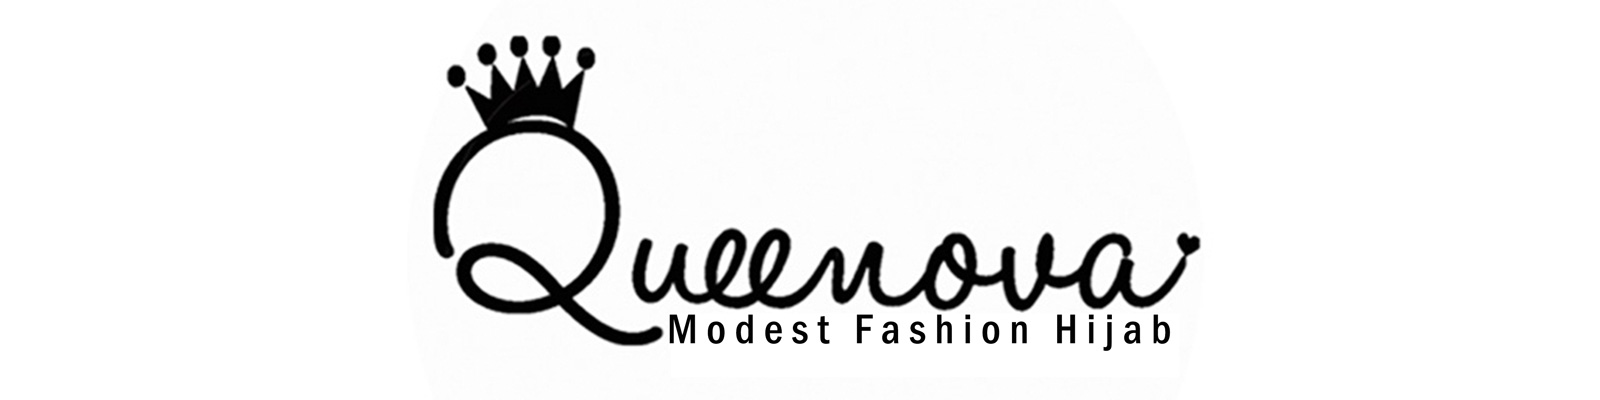 Modest Fashion, Koleksi Baju Hijab Modern, Baju Muslimah Modis Online, Busana Muslim Modis Ter